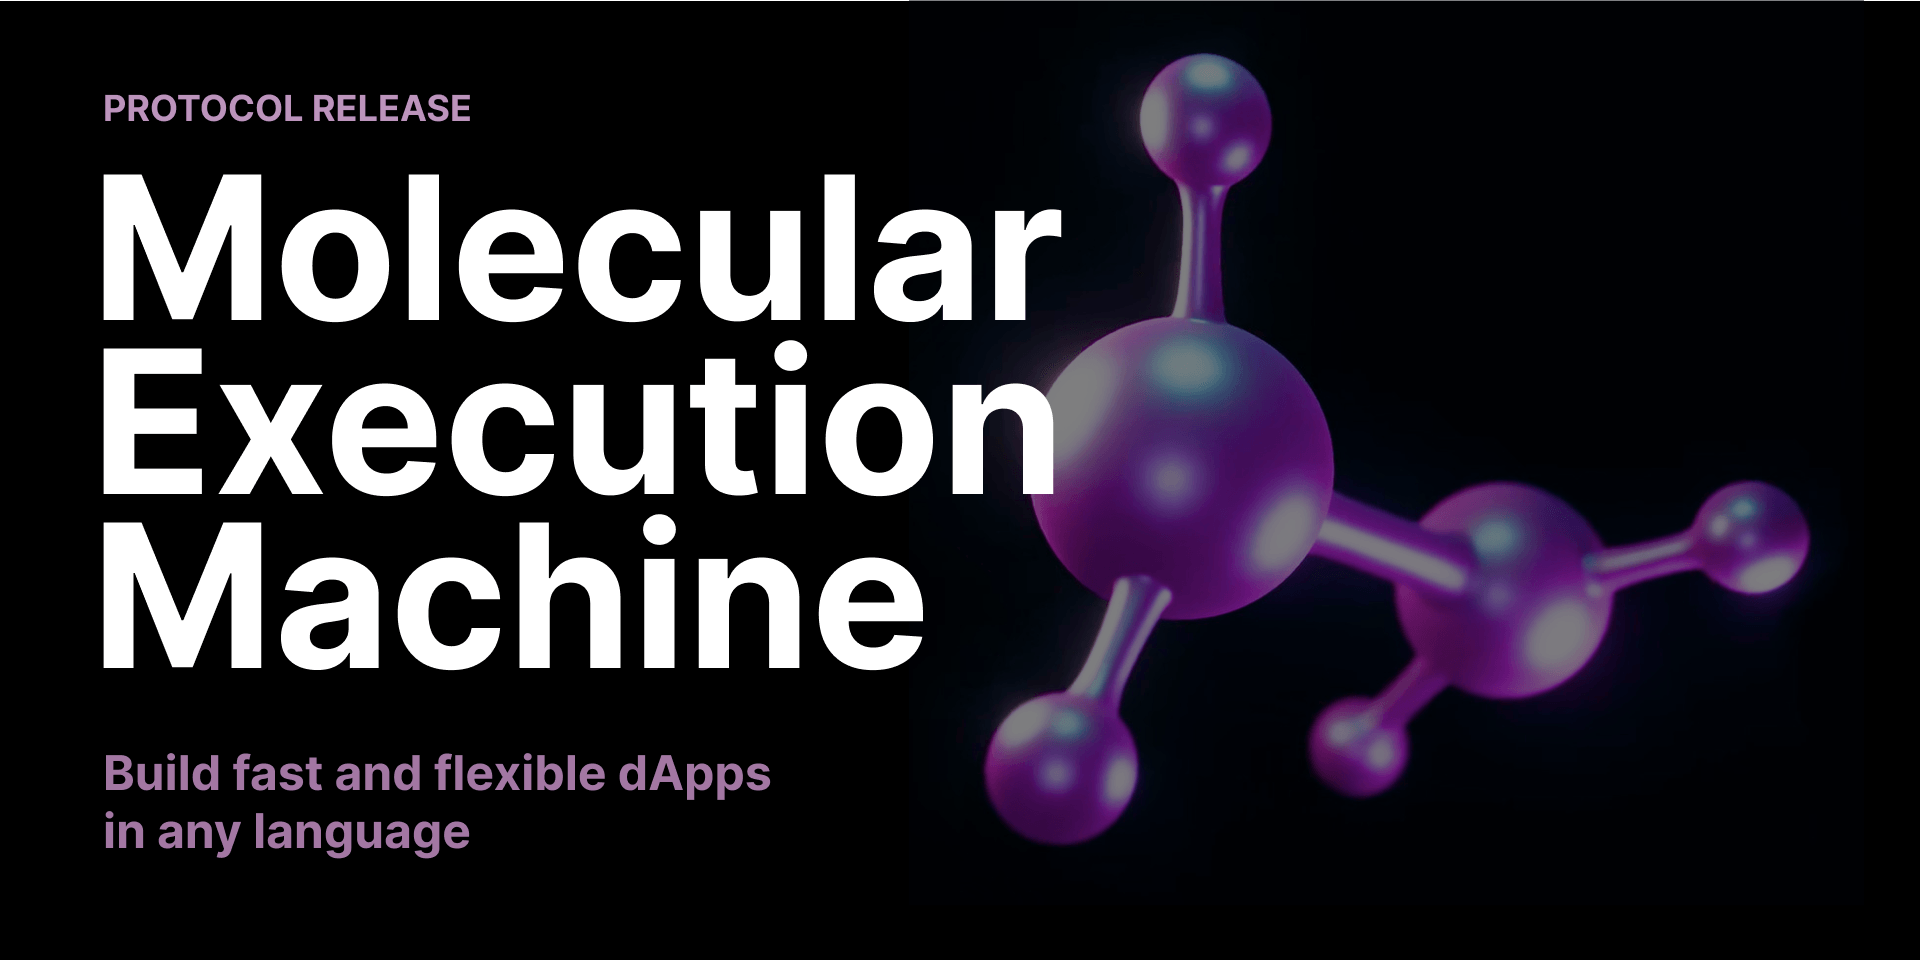 Introducing the Molecular Execution Machine